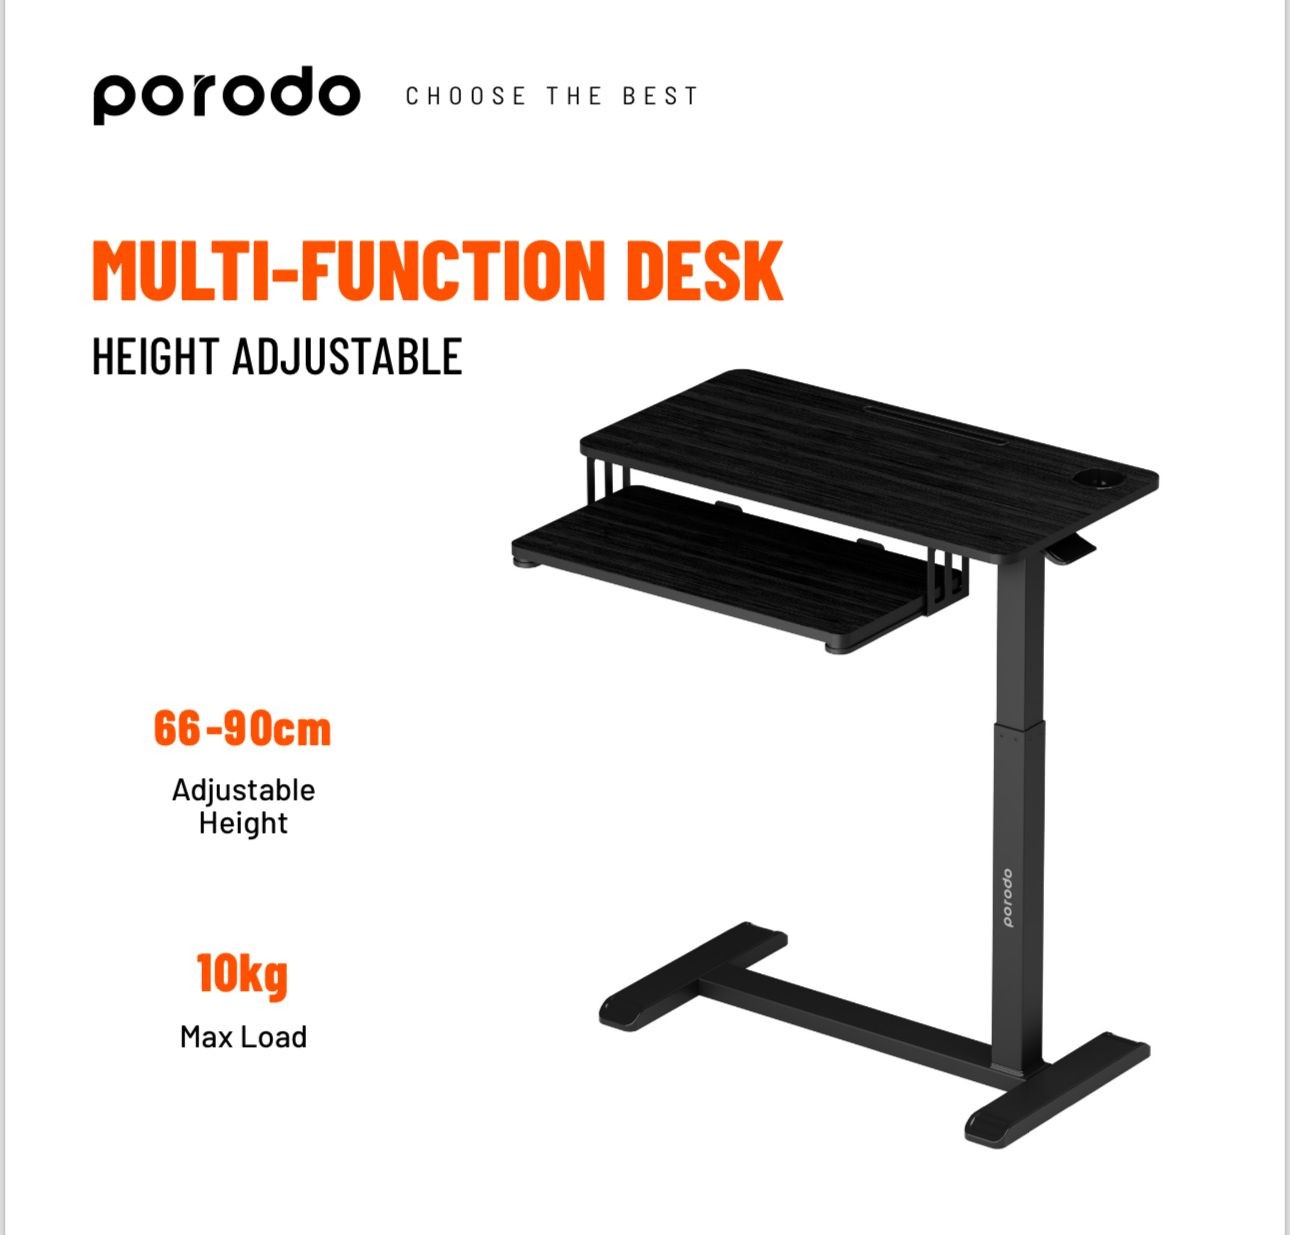 Porodo Multi-Function Desk Adjustable Heigt